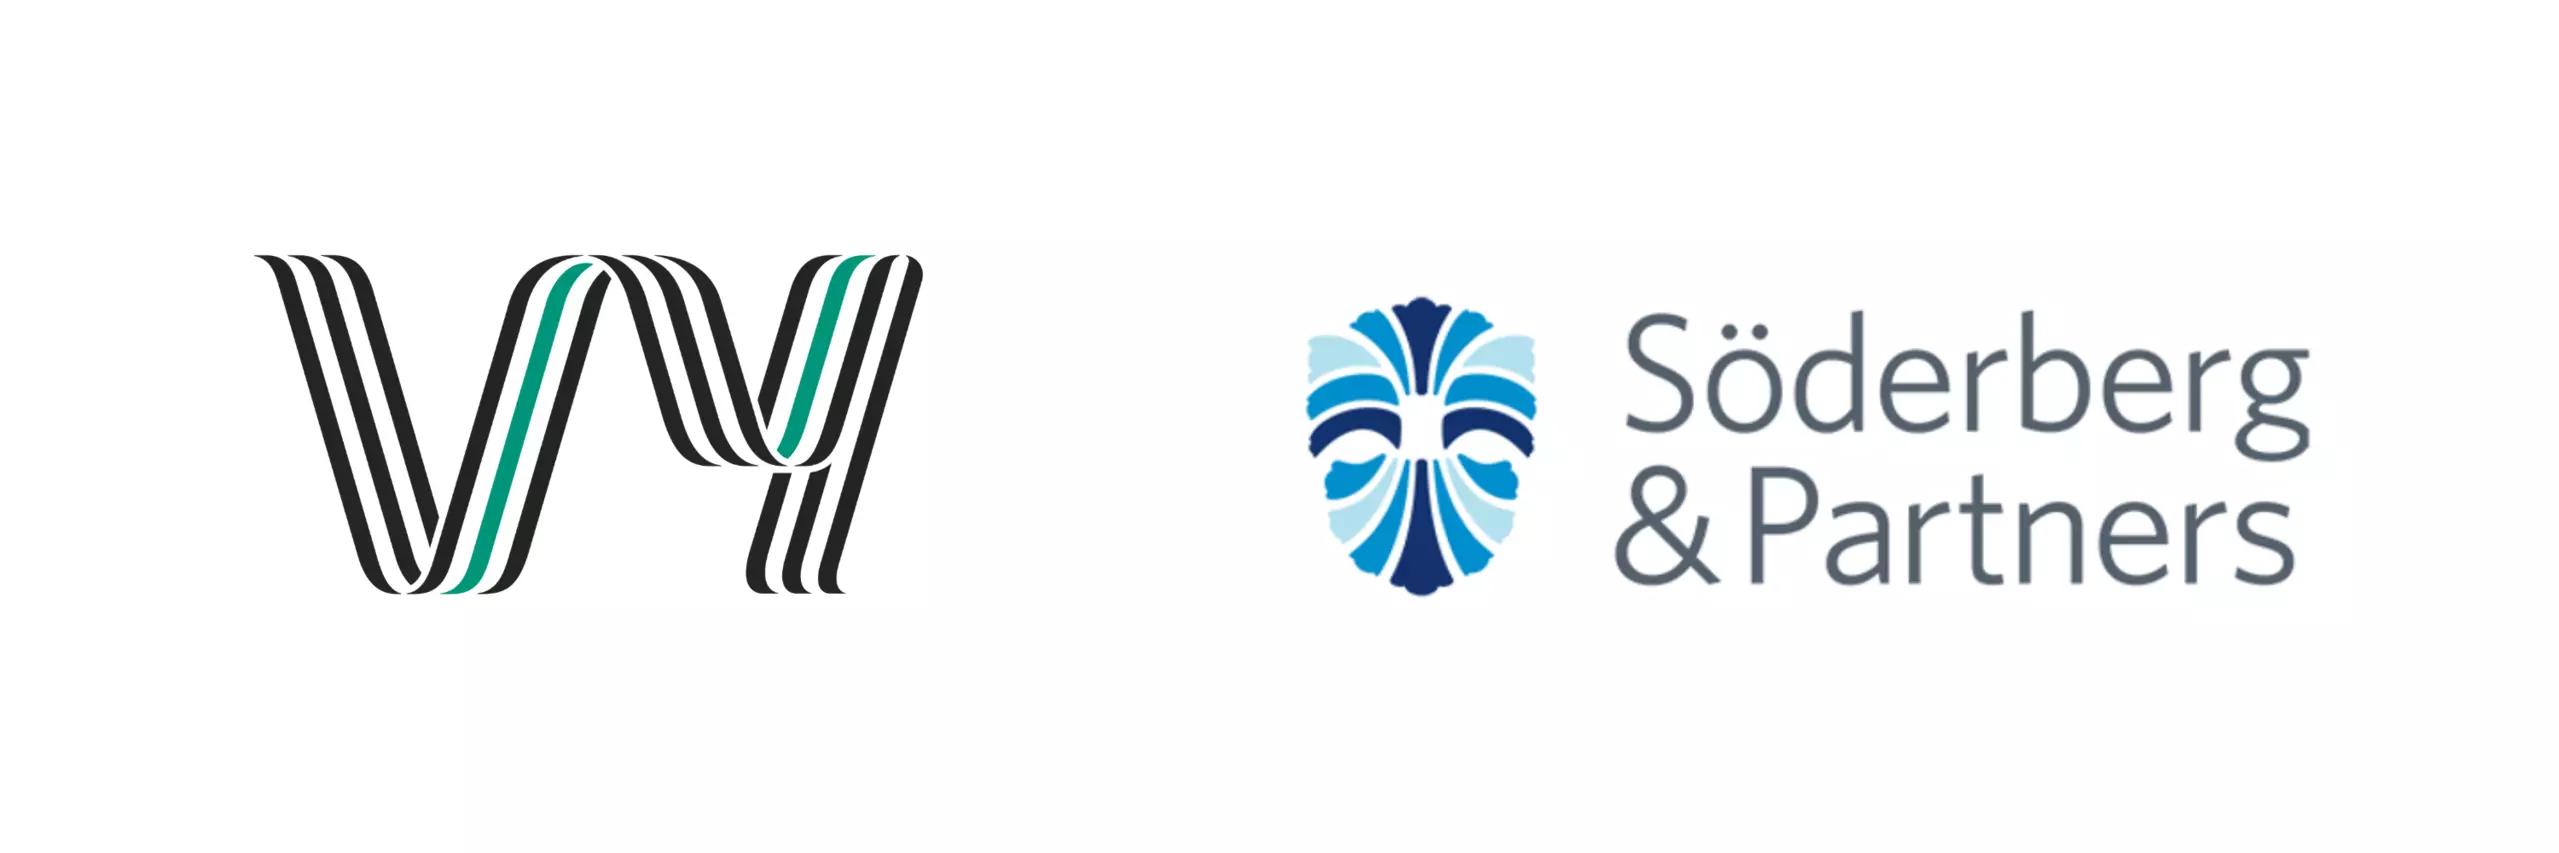 Logo til Vy og Söderberg & Partners